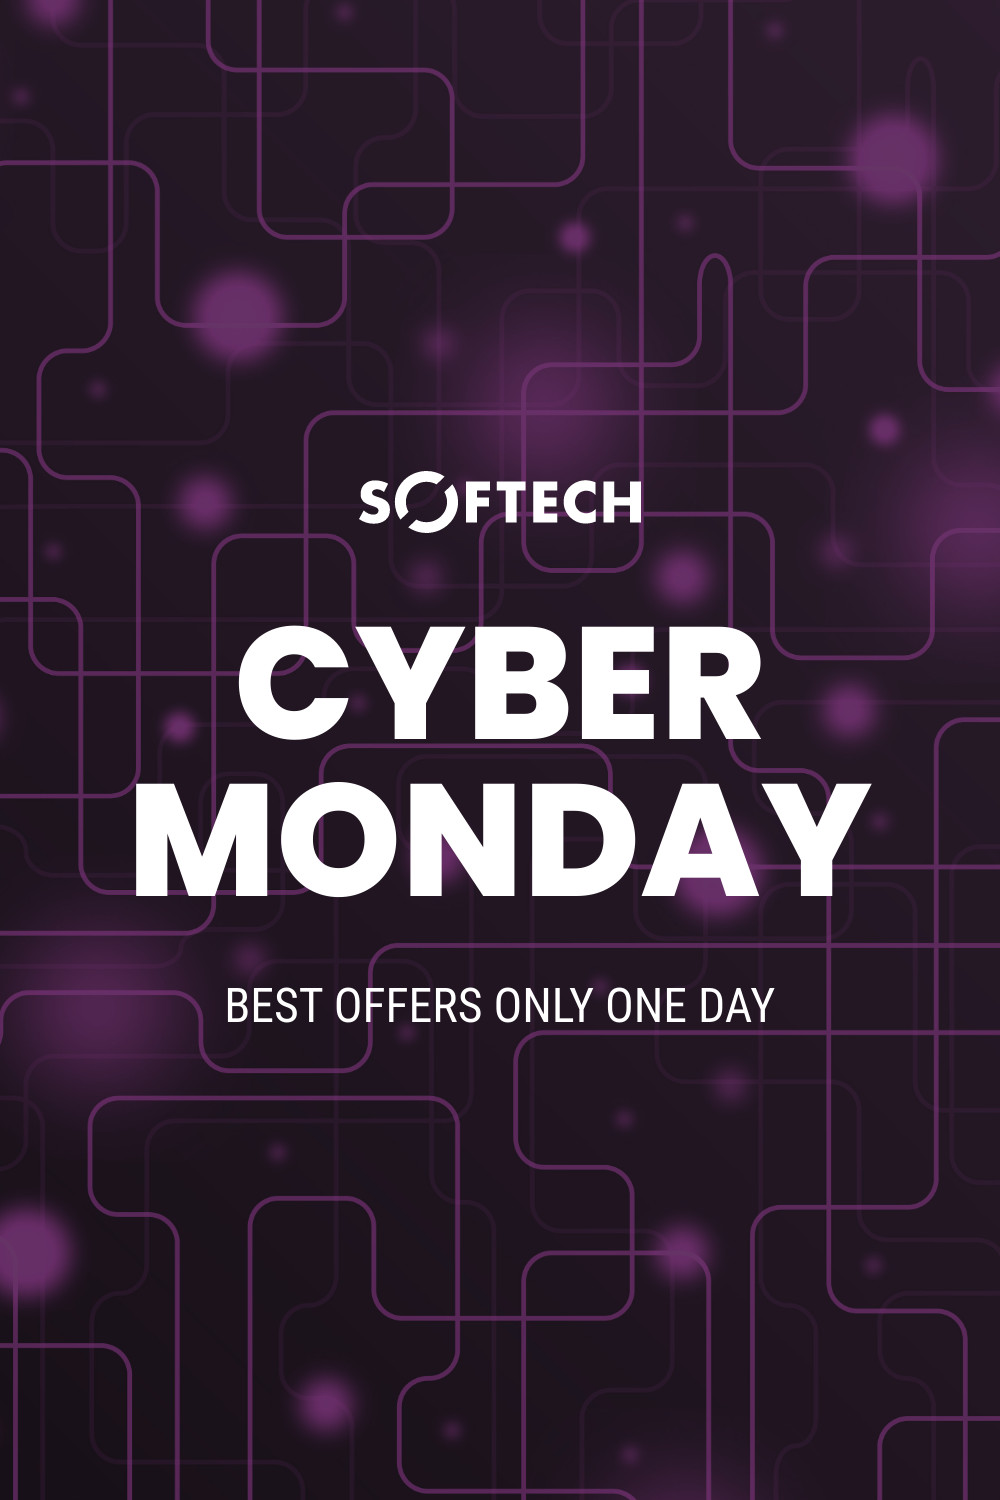 Cyber Monday Best Purple Offers